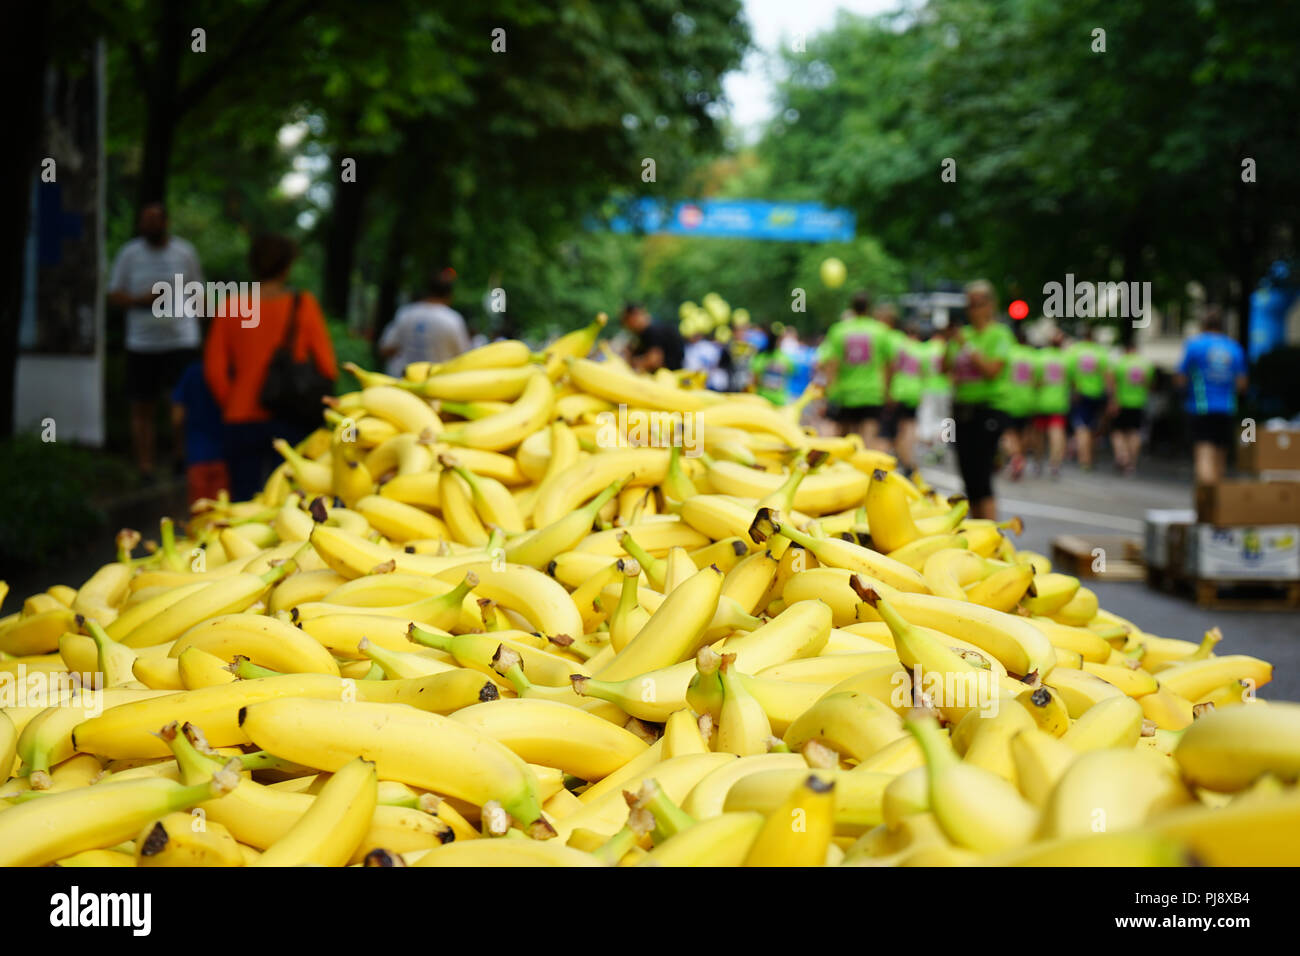 Frankfurter Firmenlauf, J.P. Morgan Corporate Challenge, Bananen beim JP Morgan Lauf am 7. Juni 2018 Frankfurt, Deutschland, Europa Banque D'Images